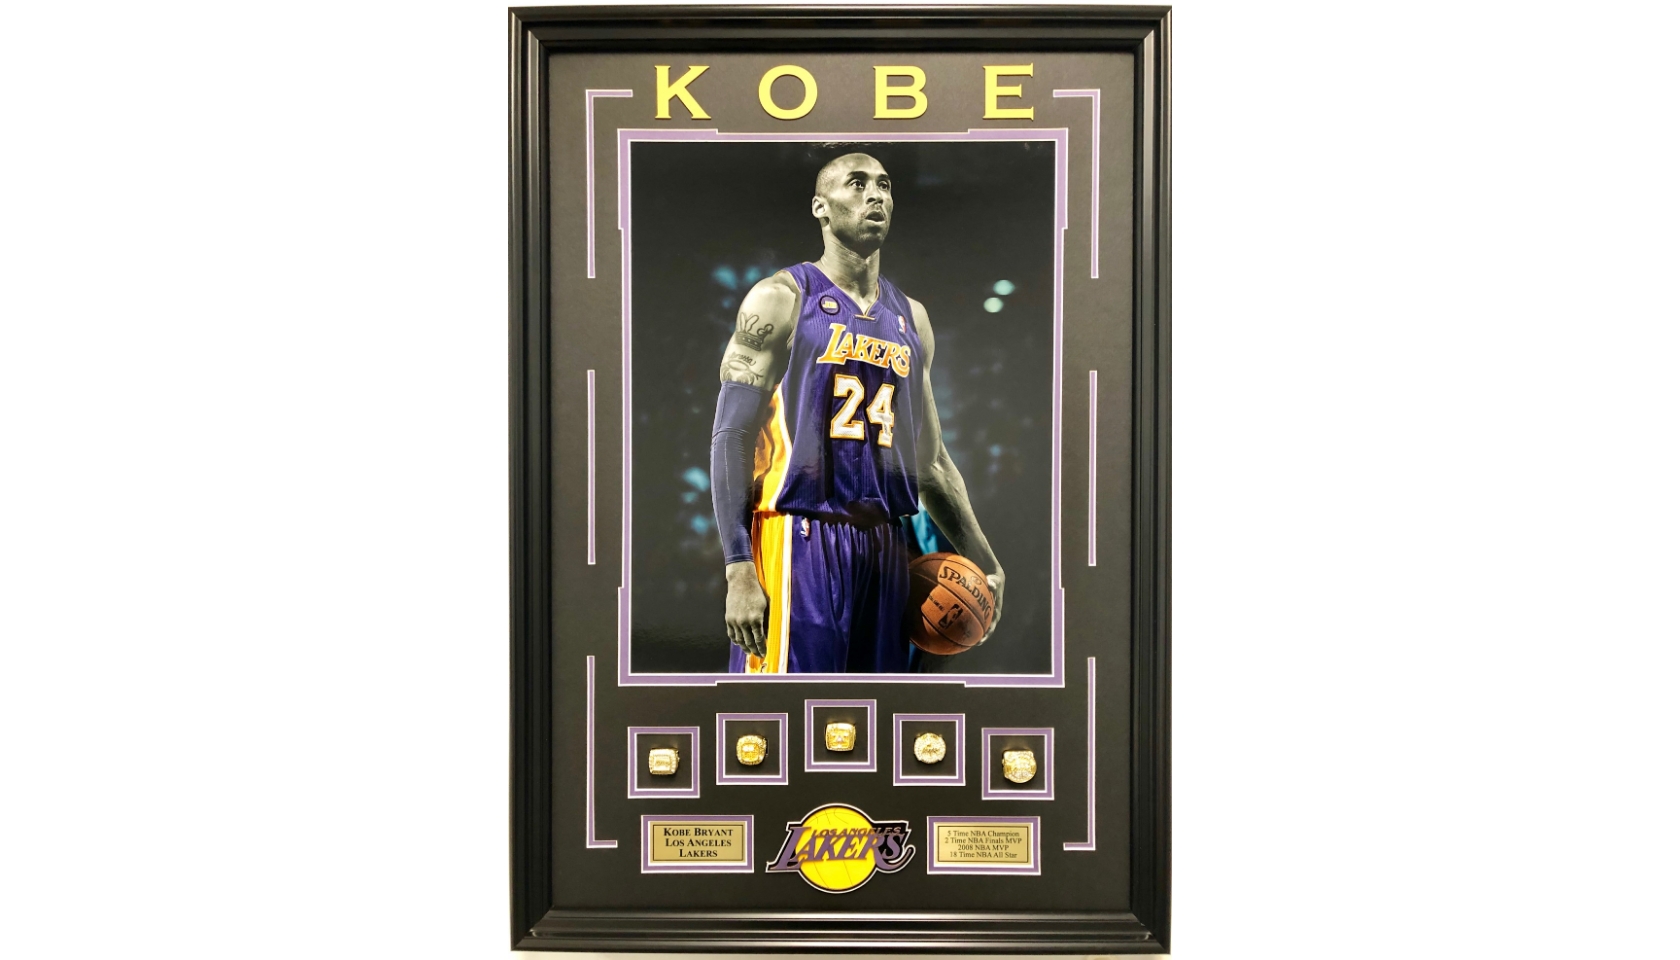 Sheshow Los Angeles Lakers #8 Kobe Bryant Fast Break Replica